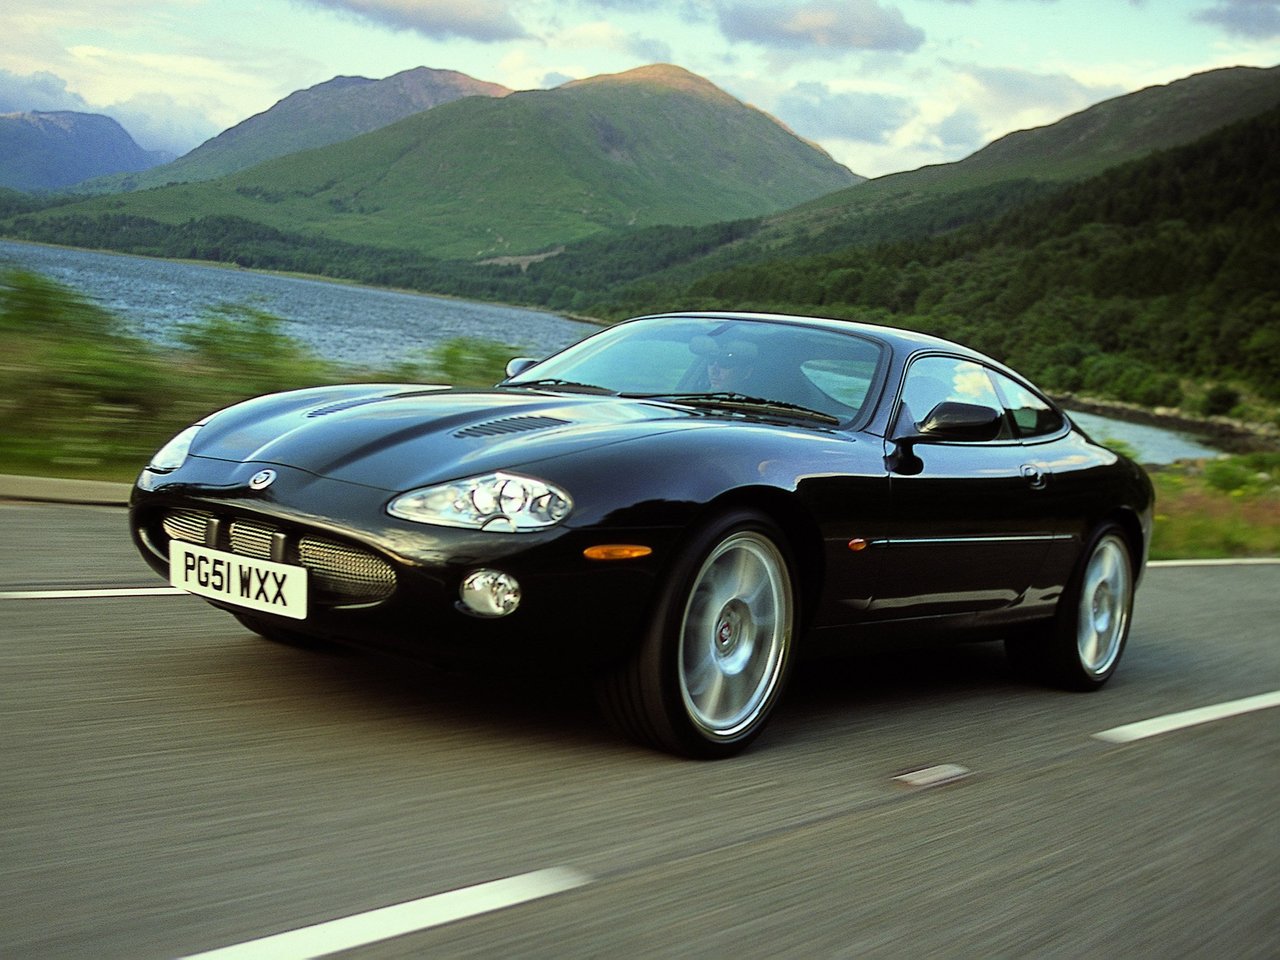 Снижаем расход Jaguar XKR на топливо, устанавливаем ГБО